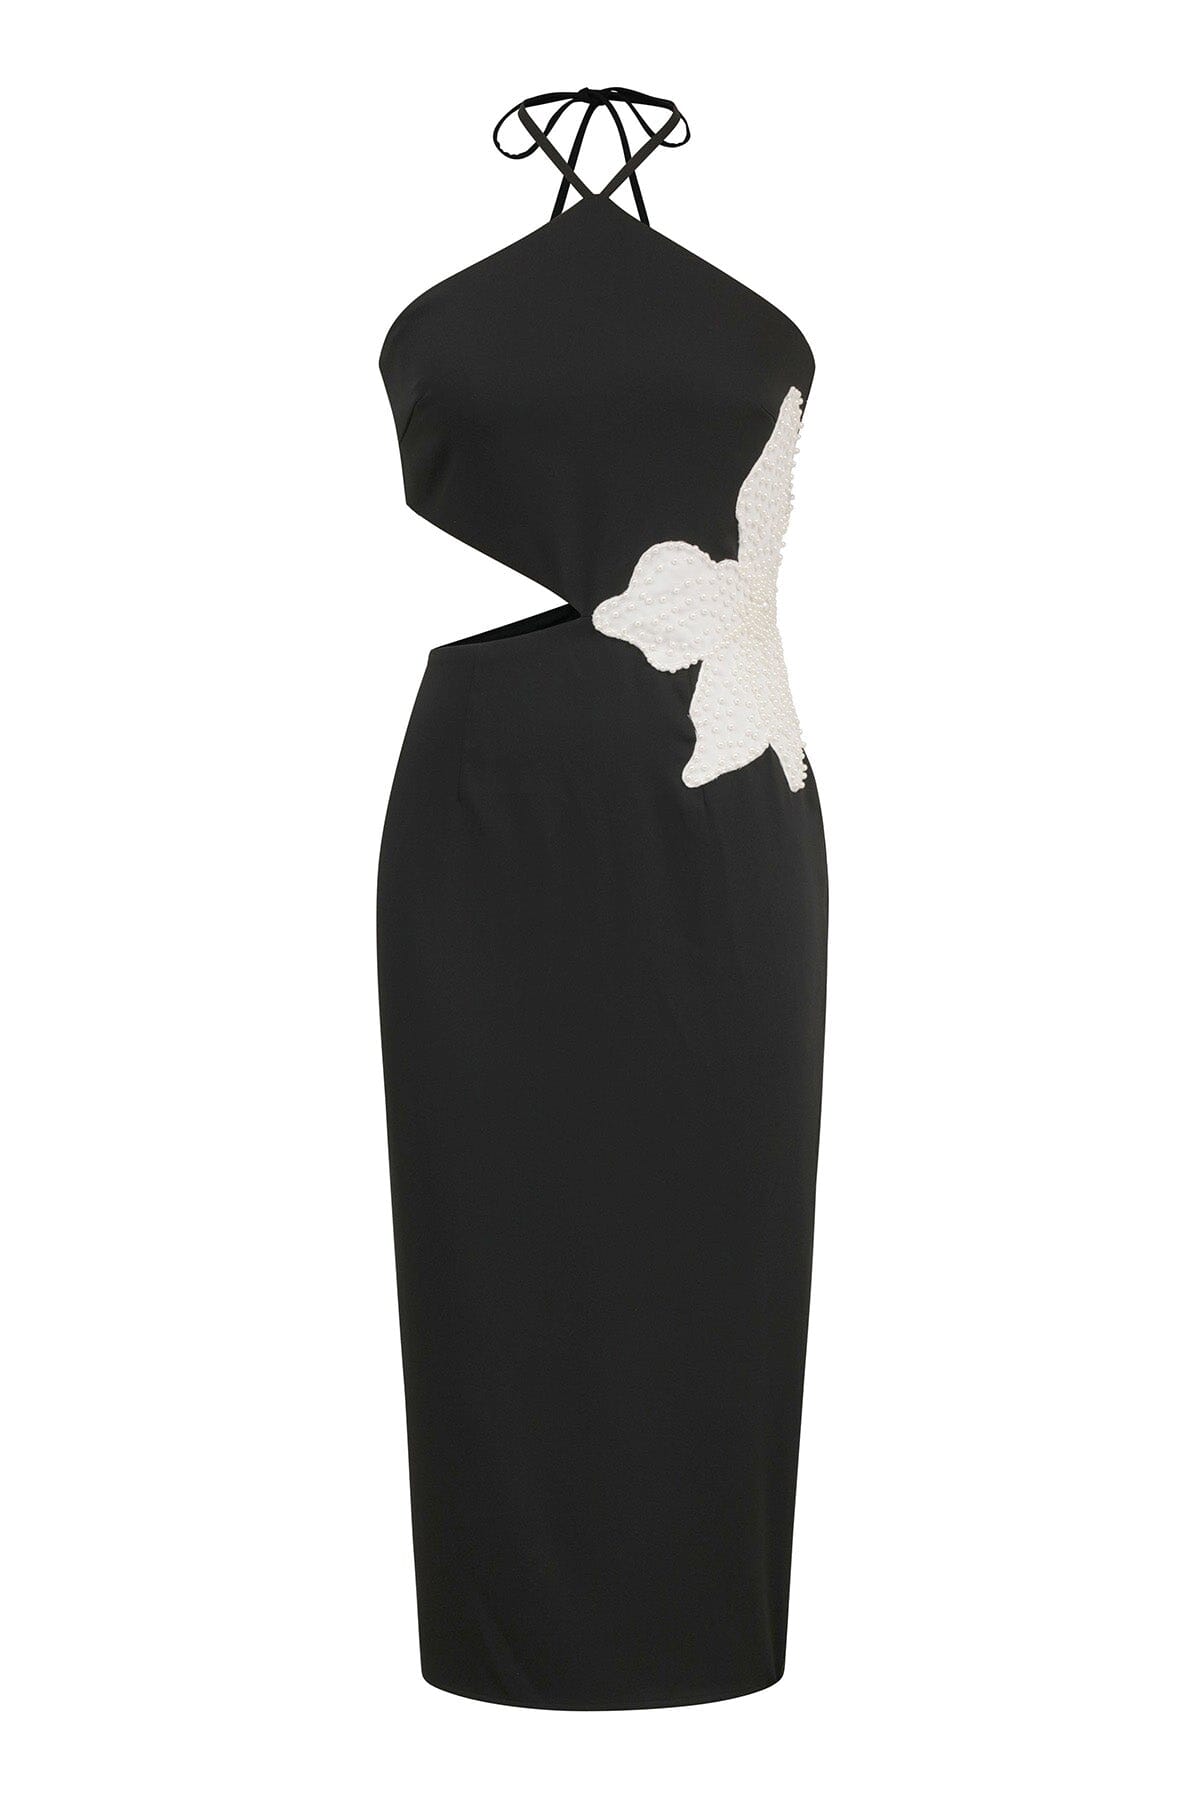 White flower embellished cut-out black halter dress - women's figure flattering classy dresses for 2024 fashion trends by Avec Les Filles